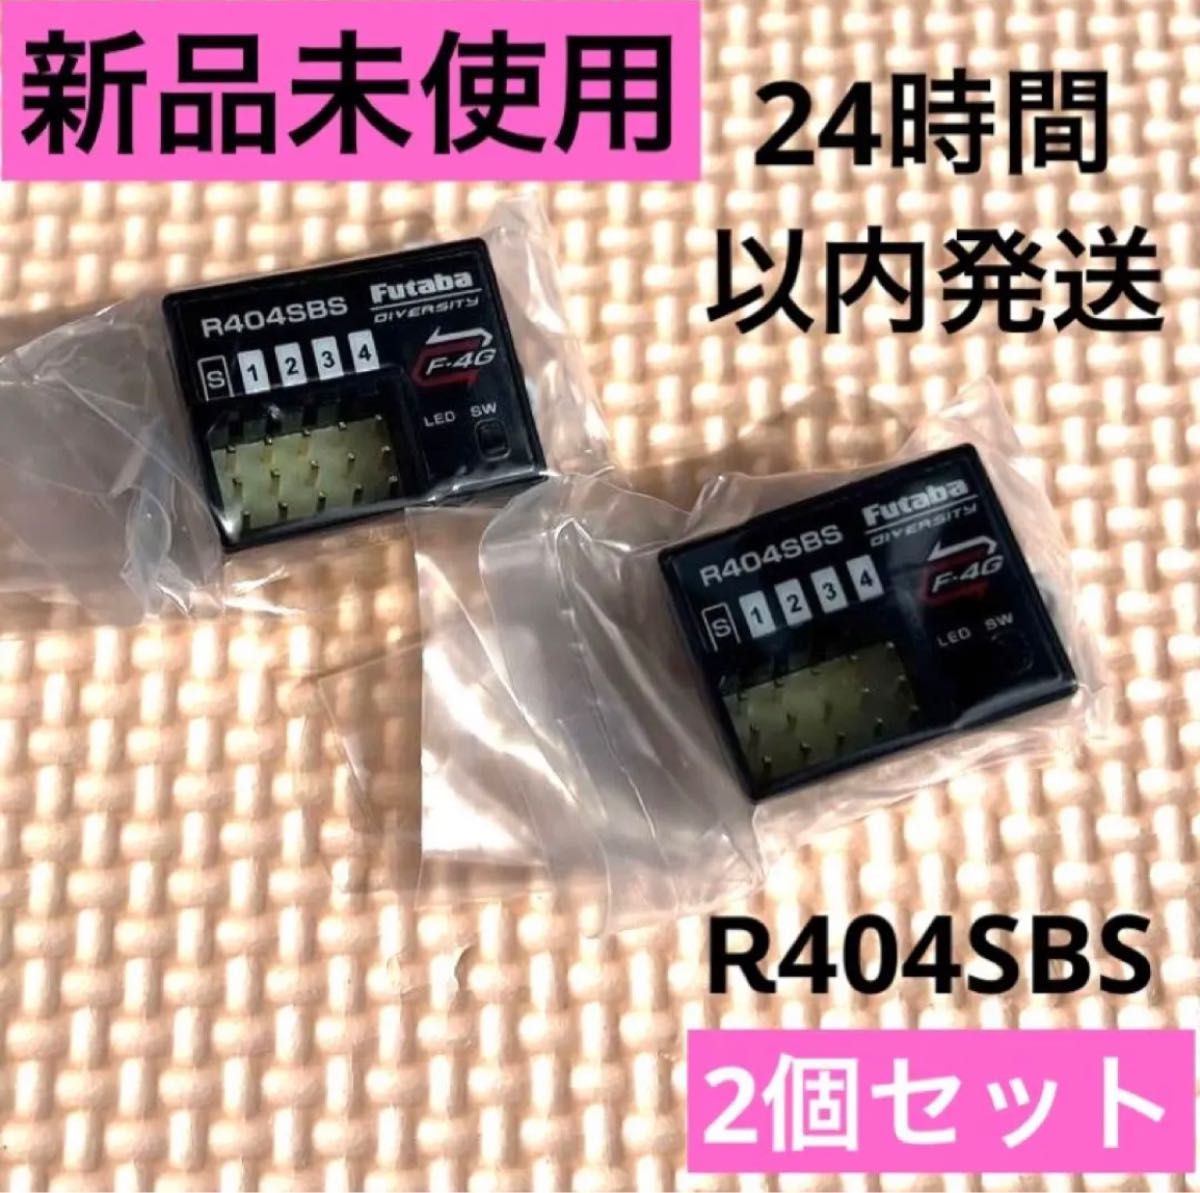 r42s① 2個セット 新品未使用 フタバ R404SBS 受信機 レシーバー Futaba 双葉 10PX 7PX